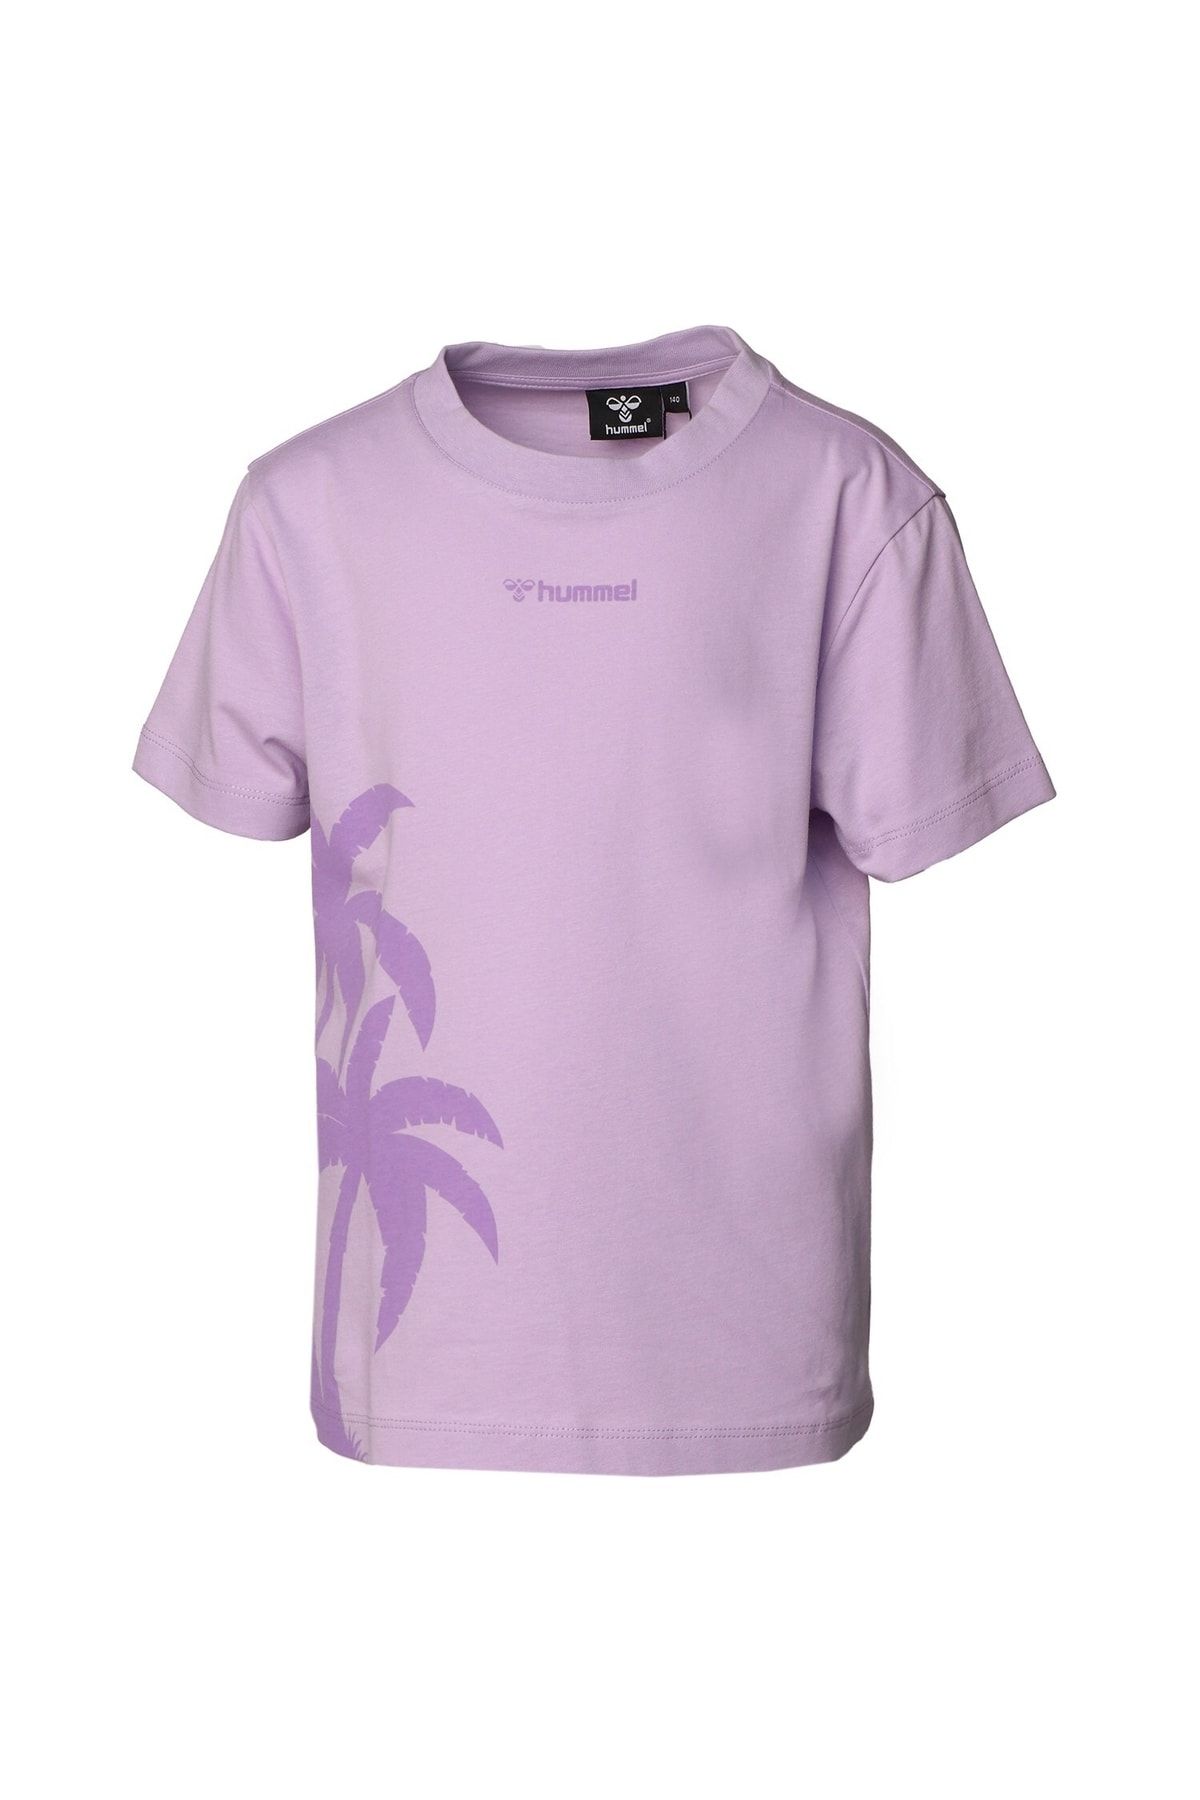 hummel Kız Çocuk Palm Lila T-shirt 911684-2221